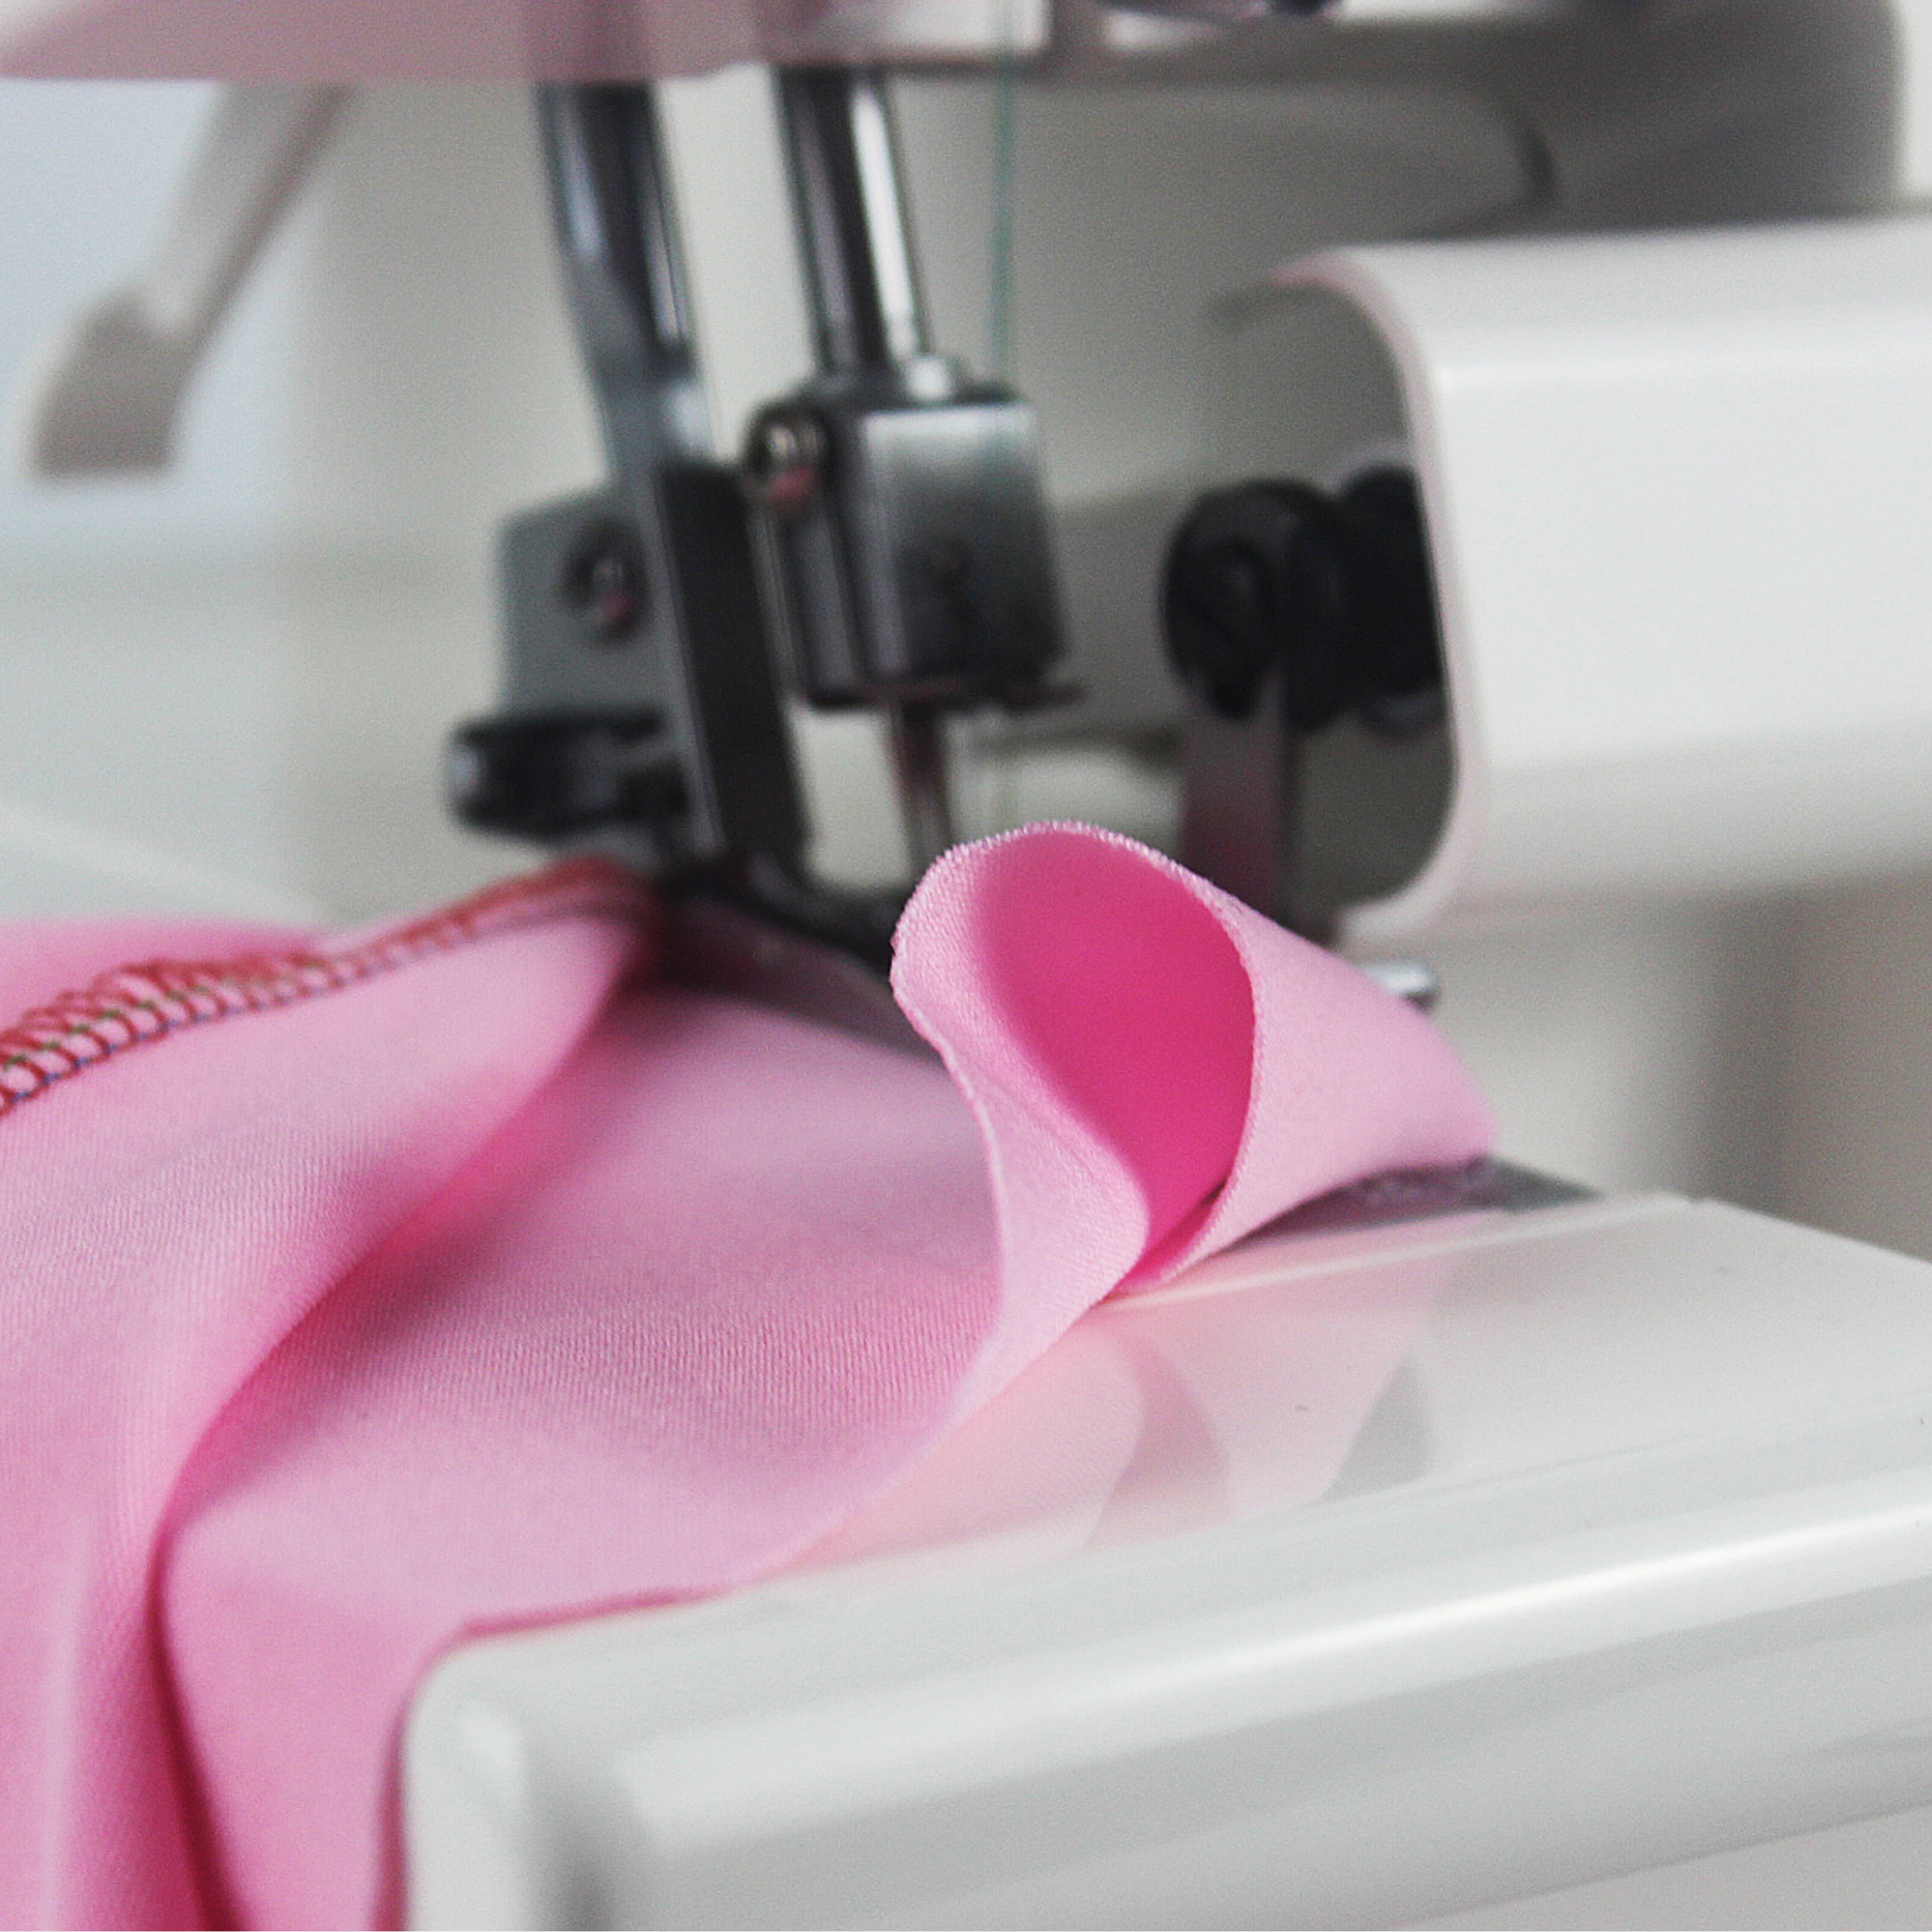 BAI mattress border sewing twin head overlock sewing machine for household